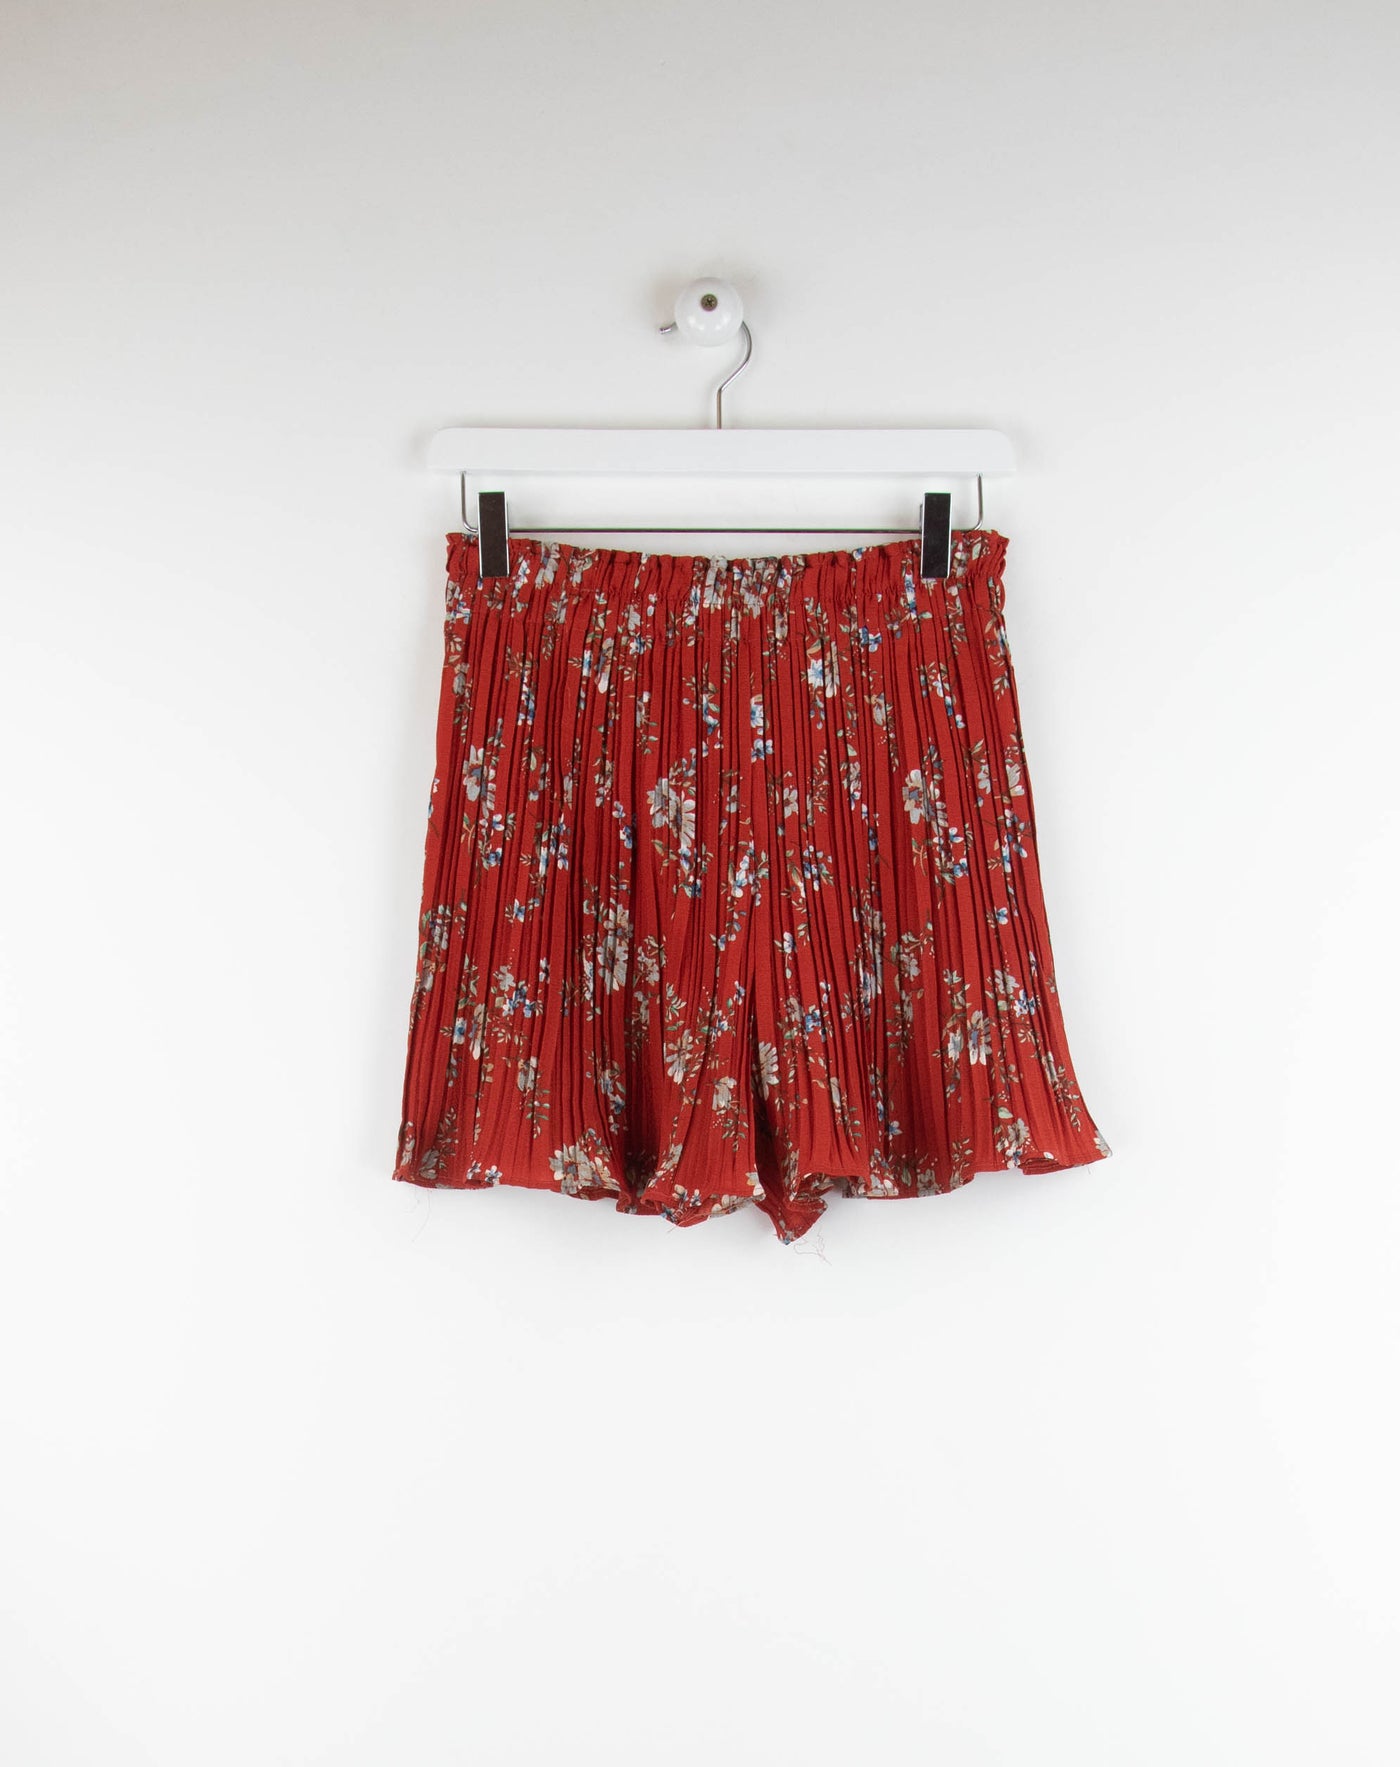 Pantalón corto drapeado rojo con estampado